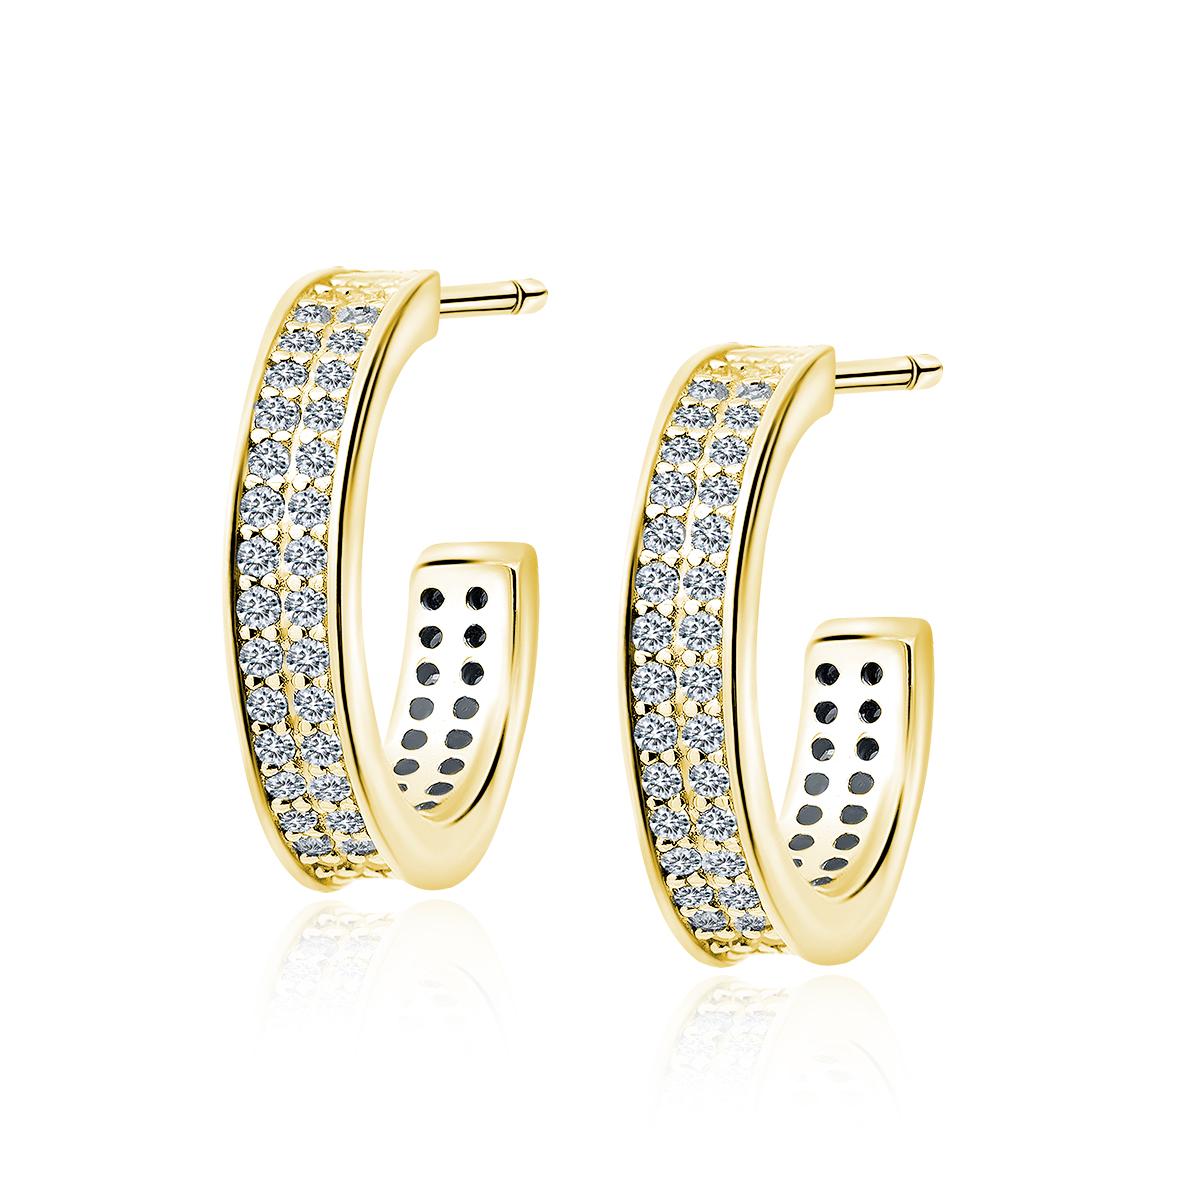 Glam Hoop Earrings–Gold Plated 1 Σκουλαρίκια Κρικάκια Glam Κίτρινο Επιχρυσωμένο Ασήμι 925 - ασήμι 925